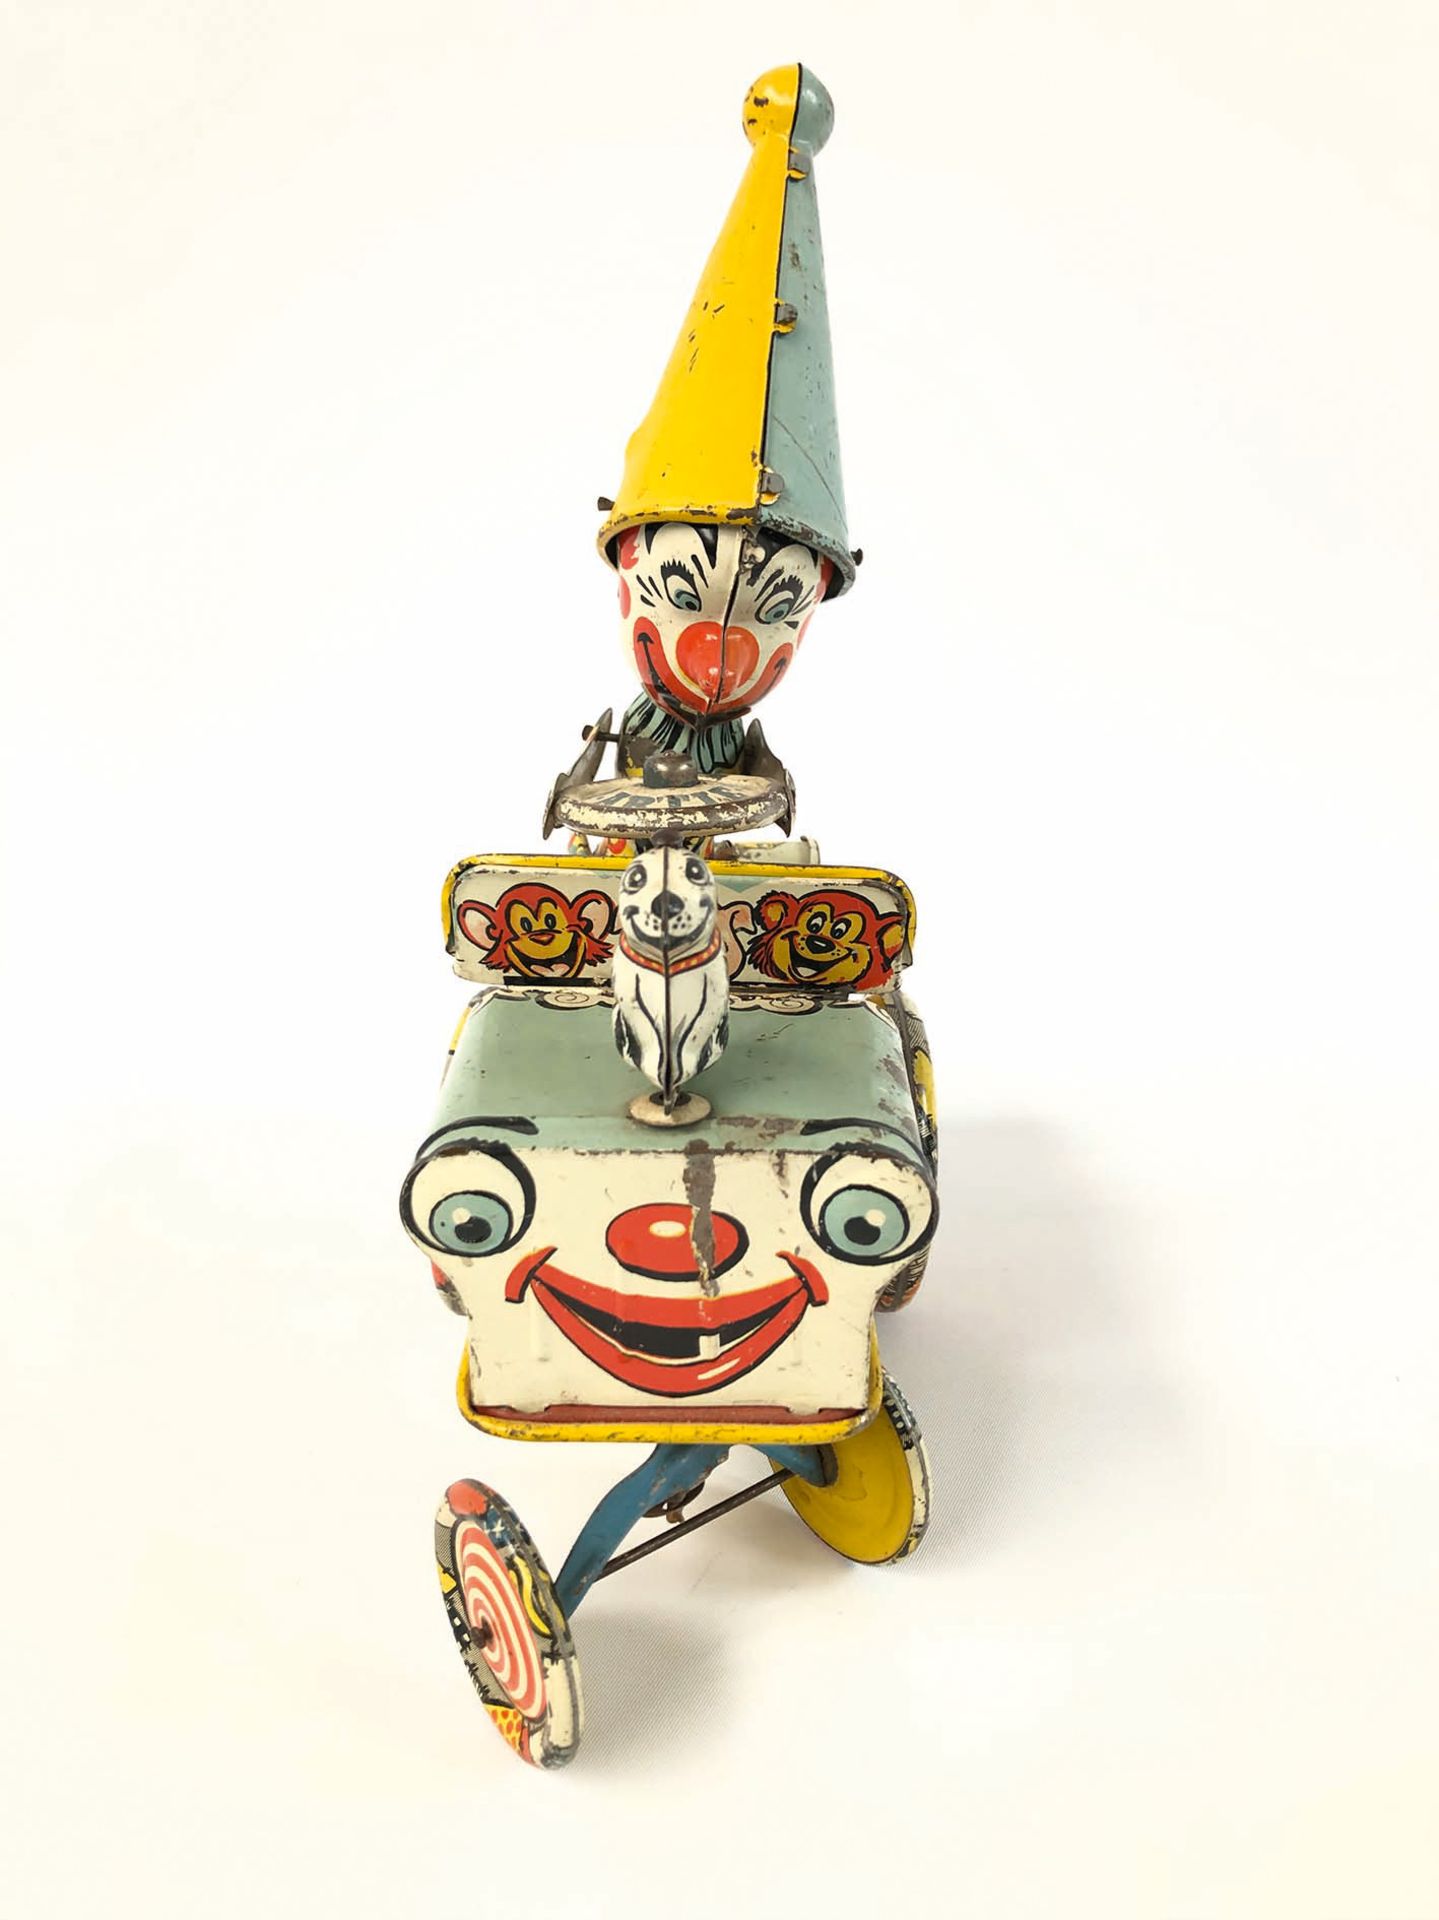 Unique Art Mfg. Co. Tin Clown Cart Toy ca. 1950 - Image 2 of 3